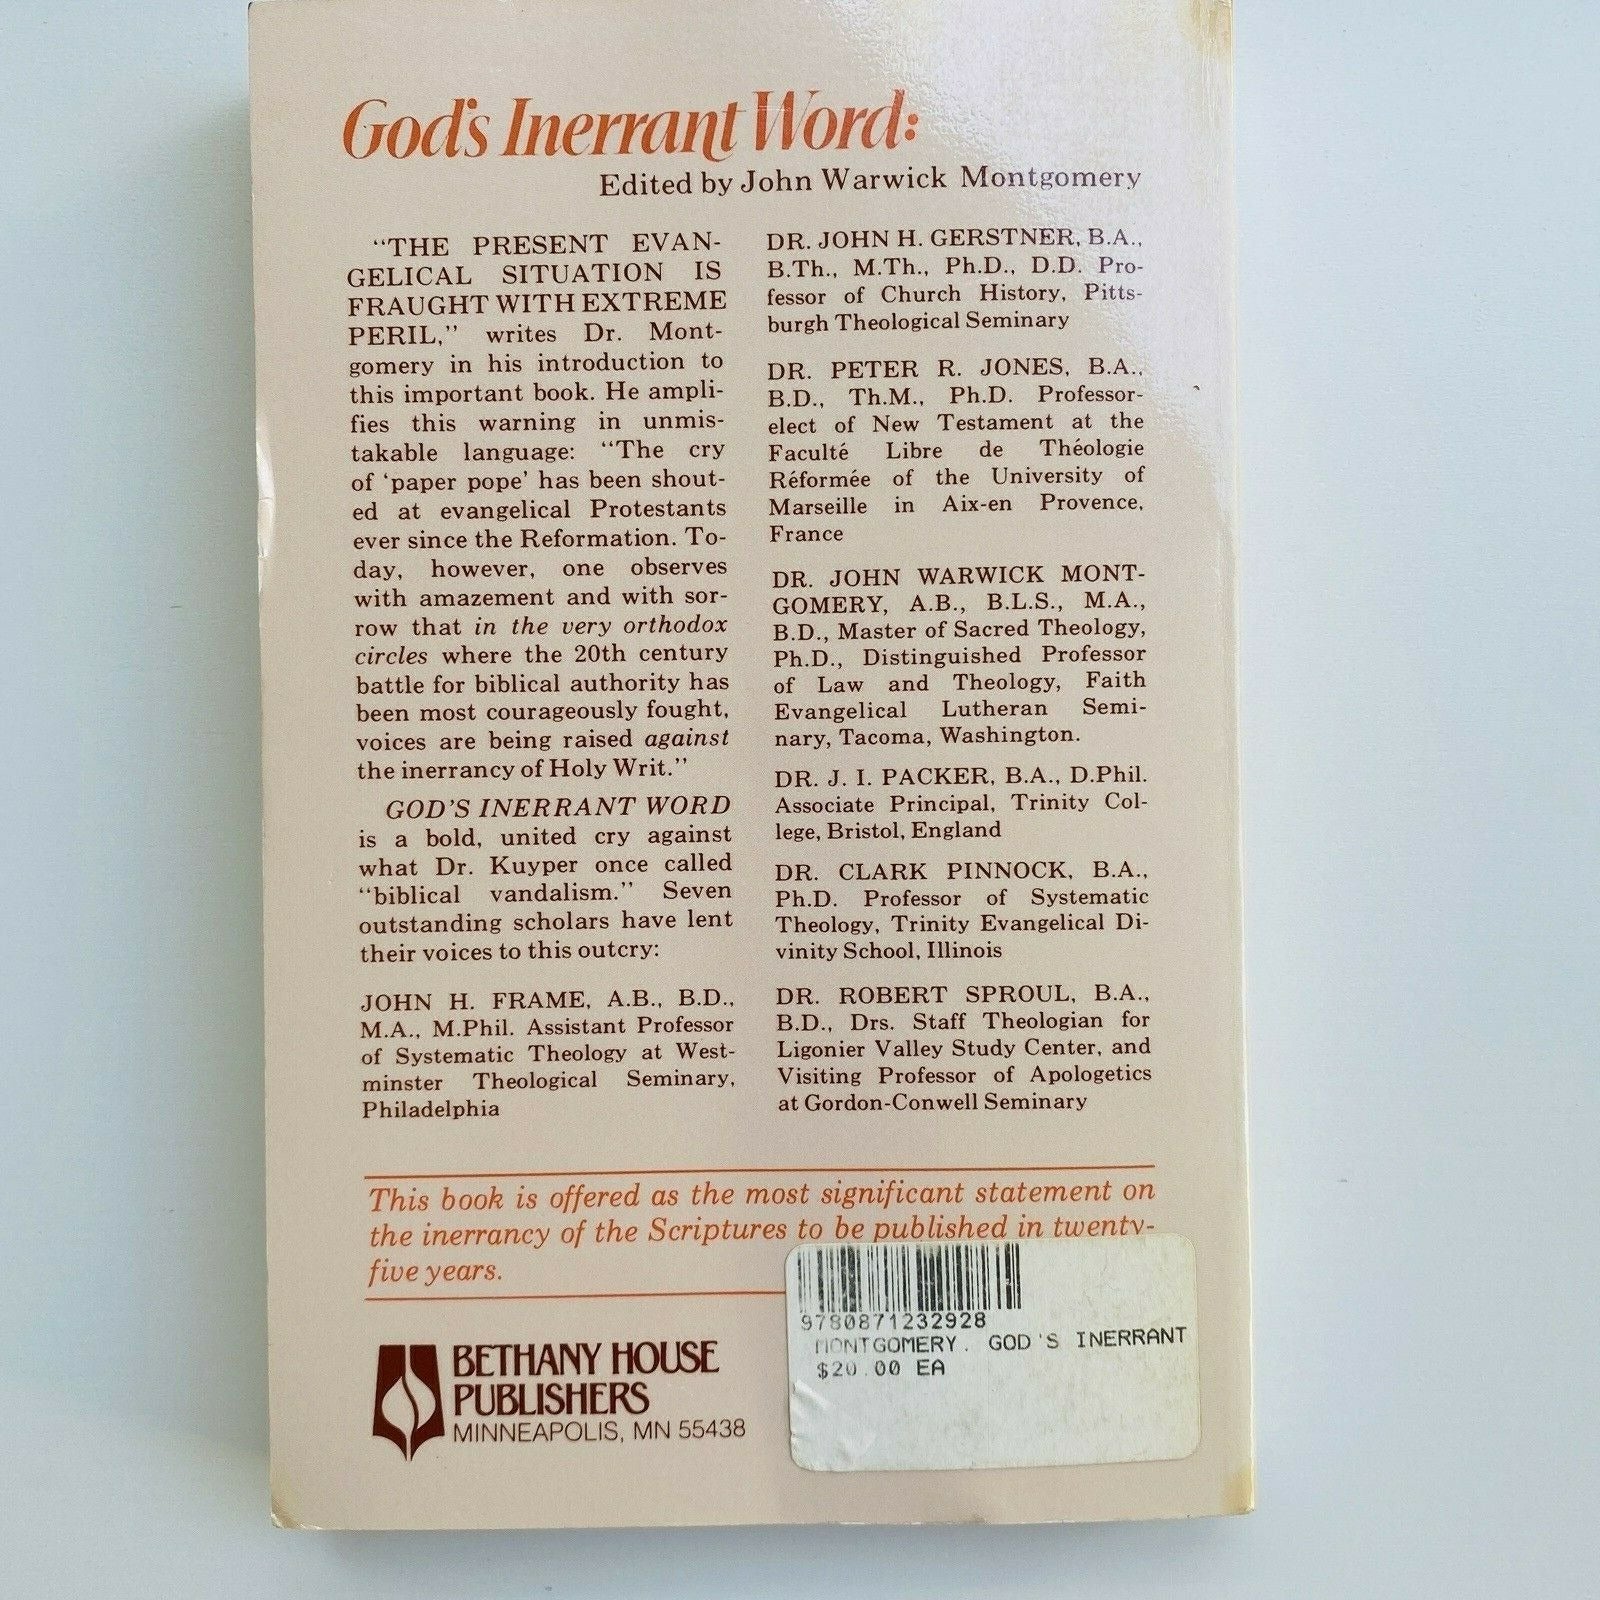 God's Inerrant Word Edited by John Warwick Montgomery